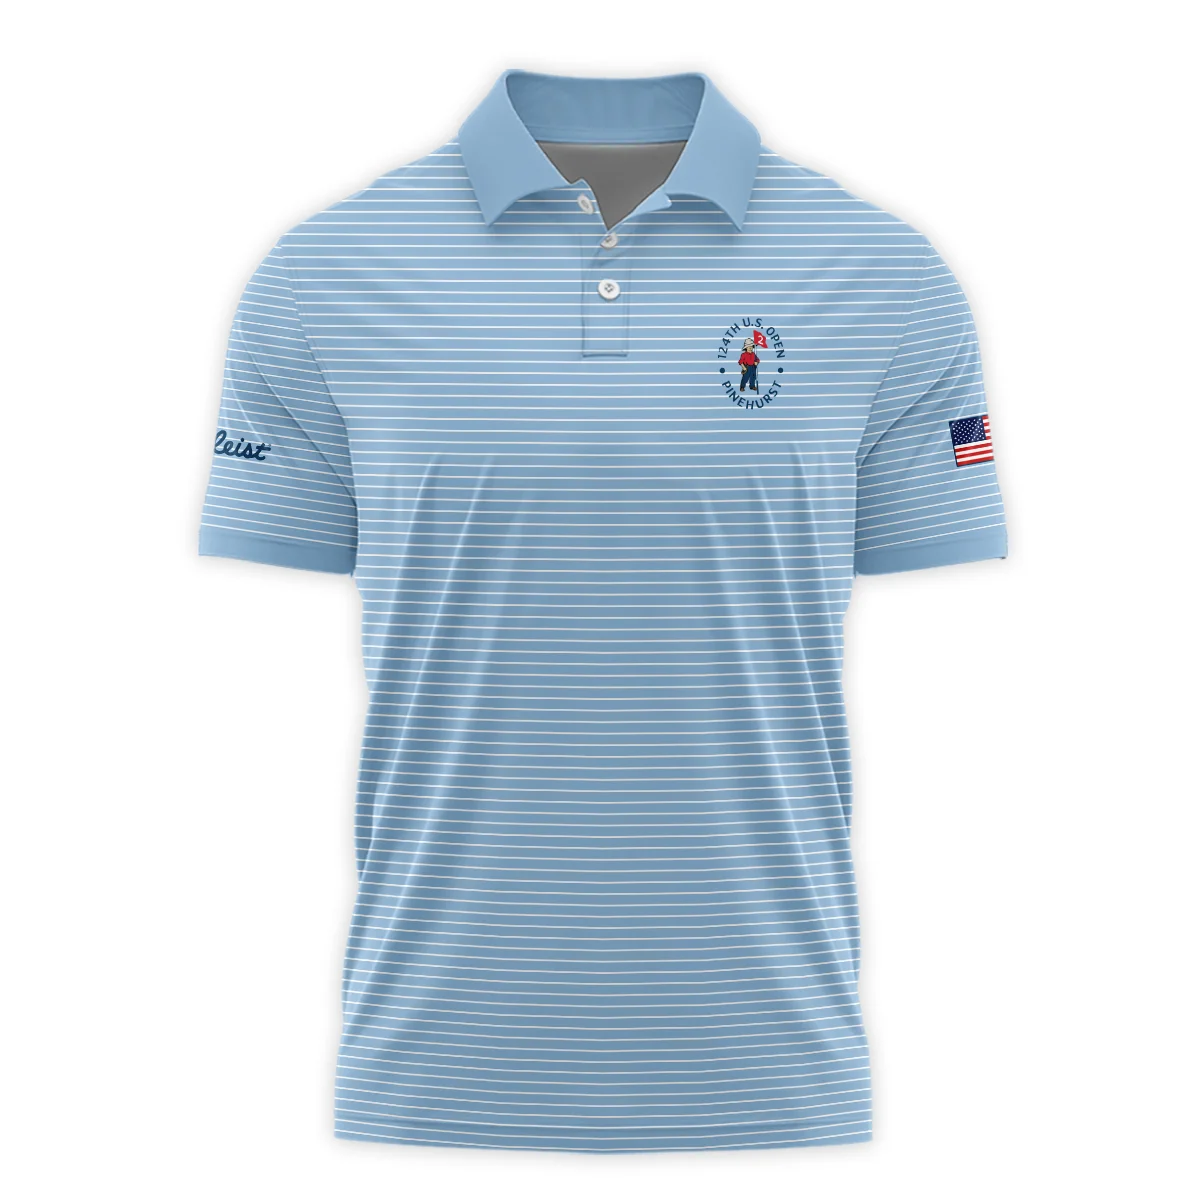 Blue White Line Pattern Titleist 124th U.S. Open Pinehurst Zipper Hoodie Shirt Style Classic